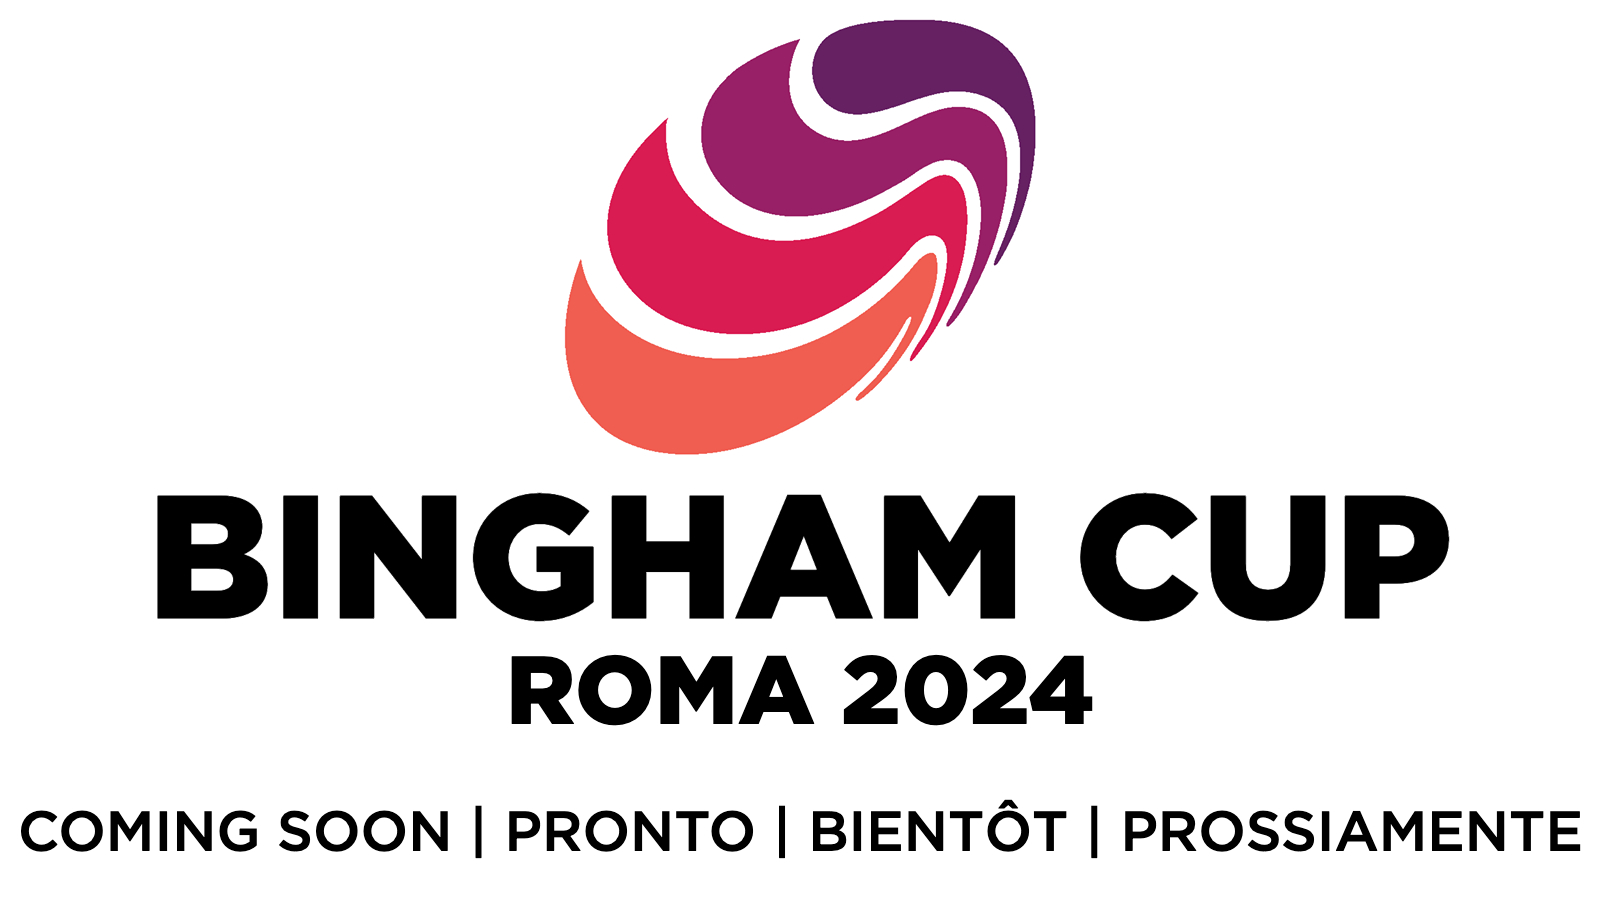 Bingham Cup – Rom 2024: HBT+ rugbyturnering